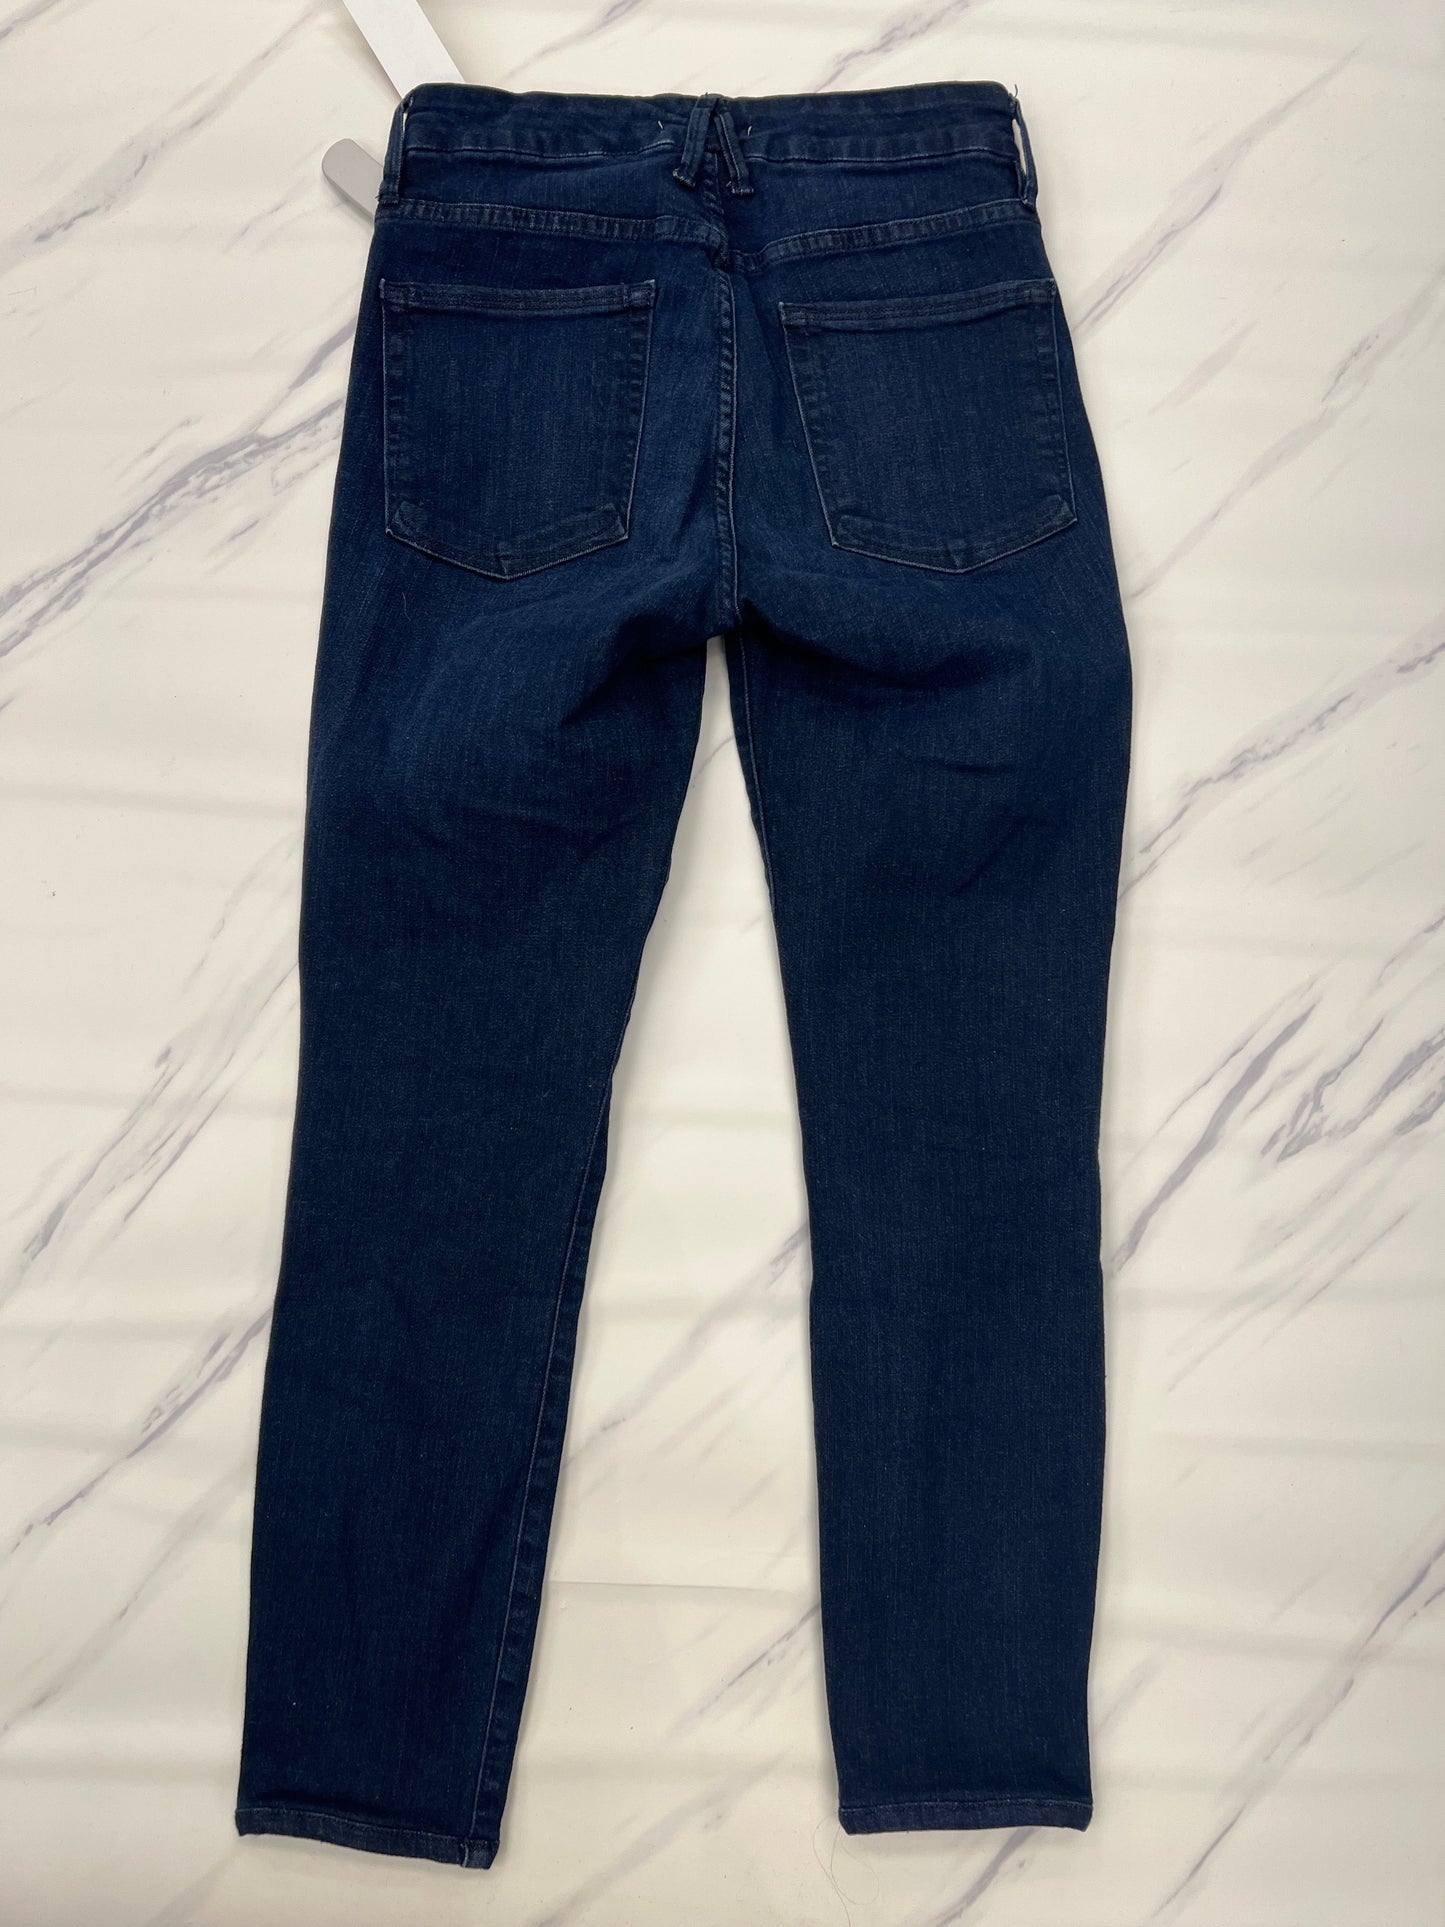 Jeans Designer Good American, Size 4